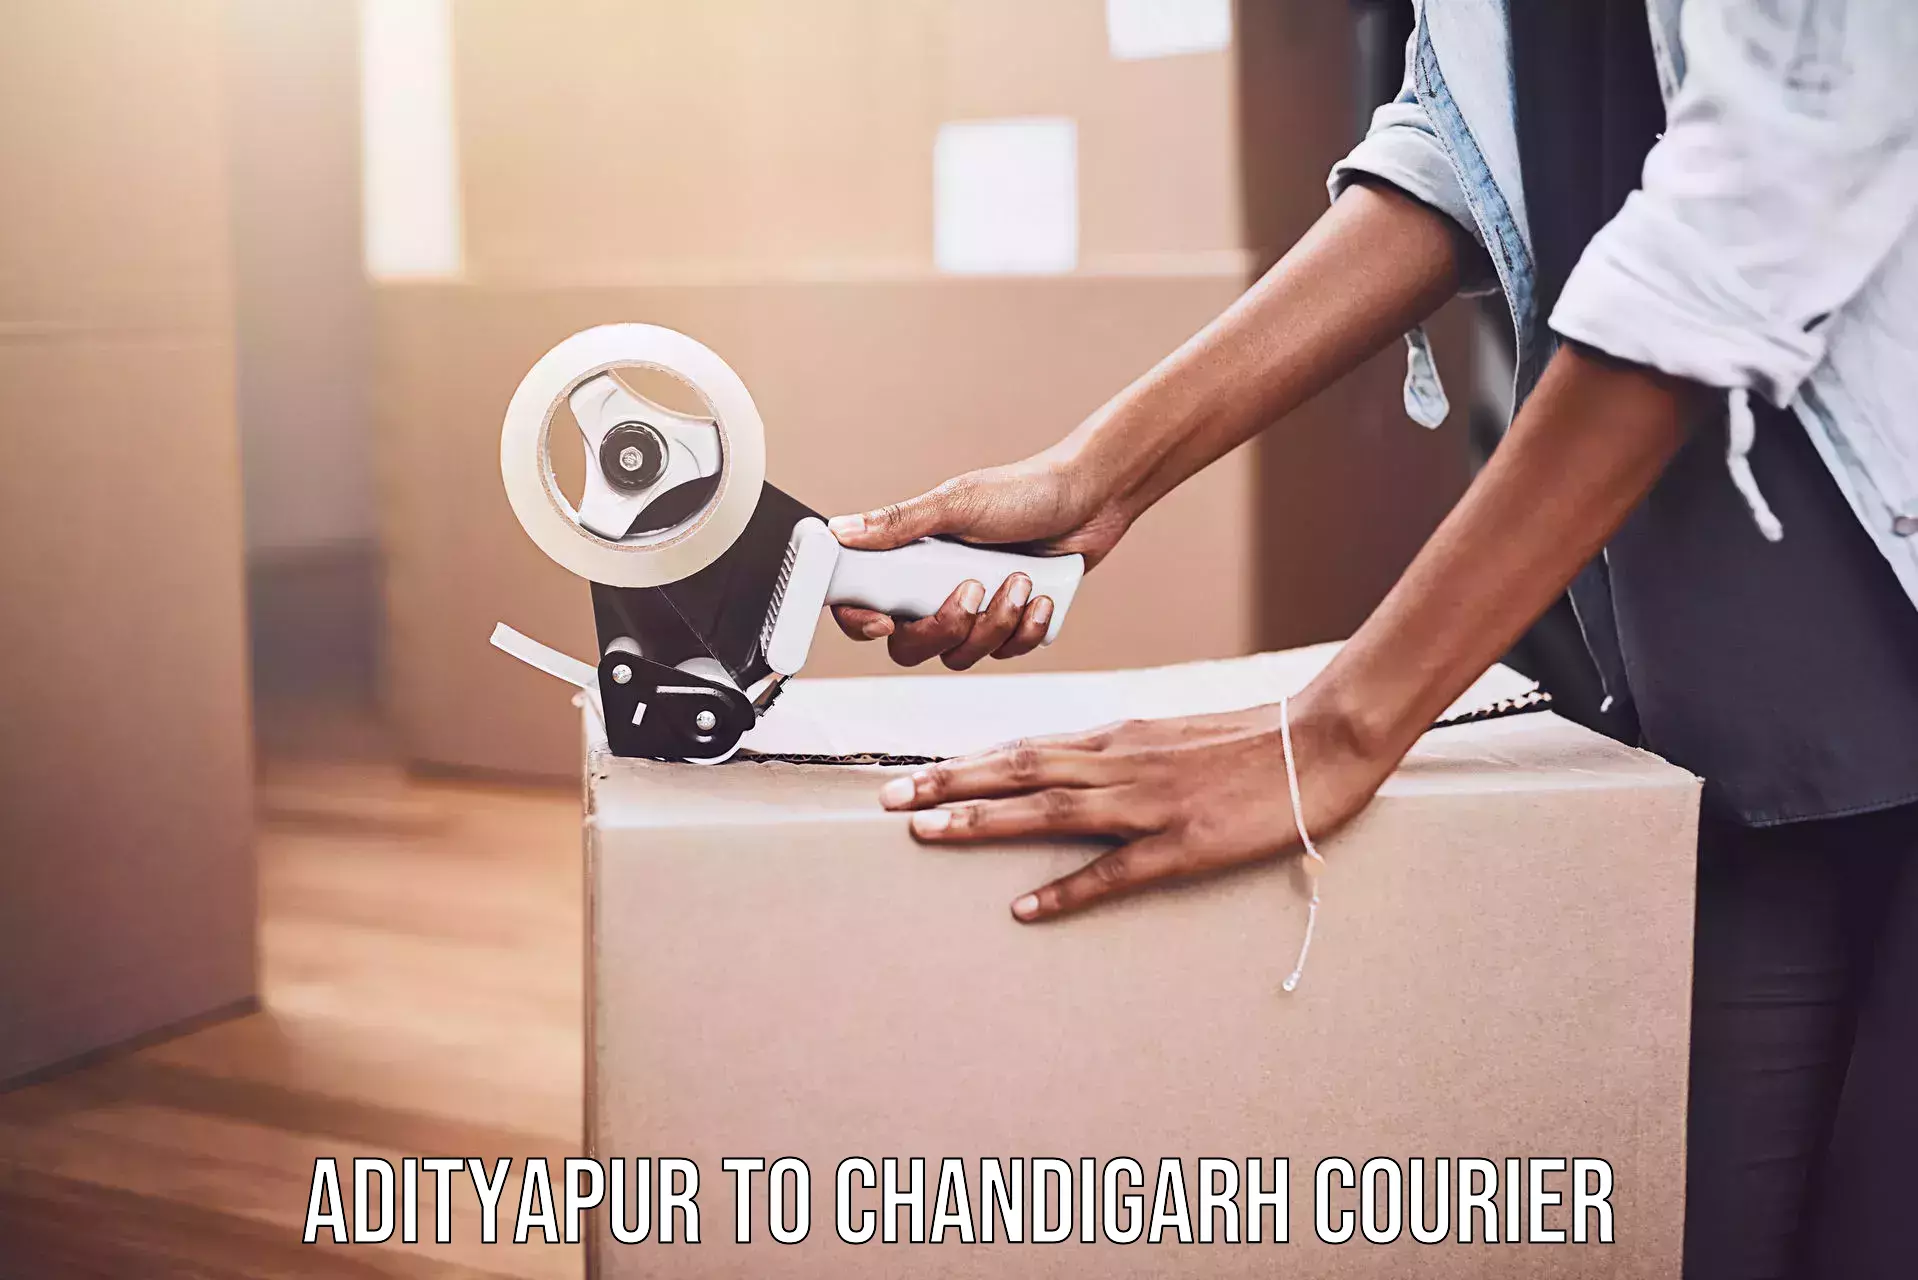 Easy return solutions Adityapur to Chandigarh